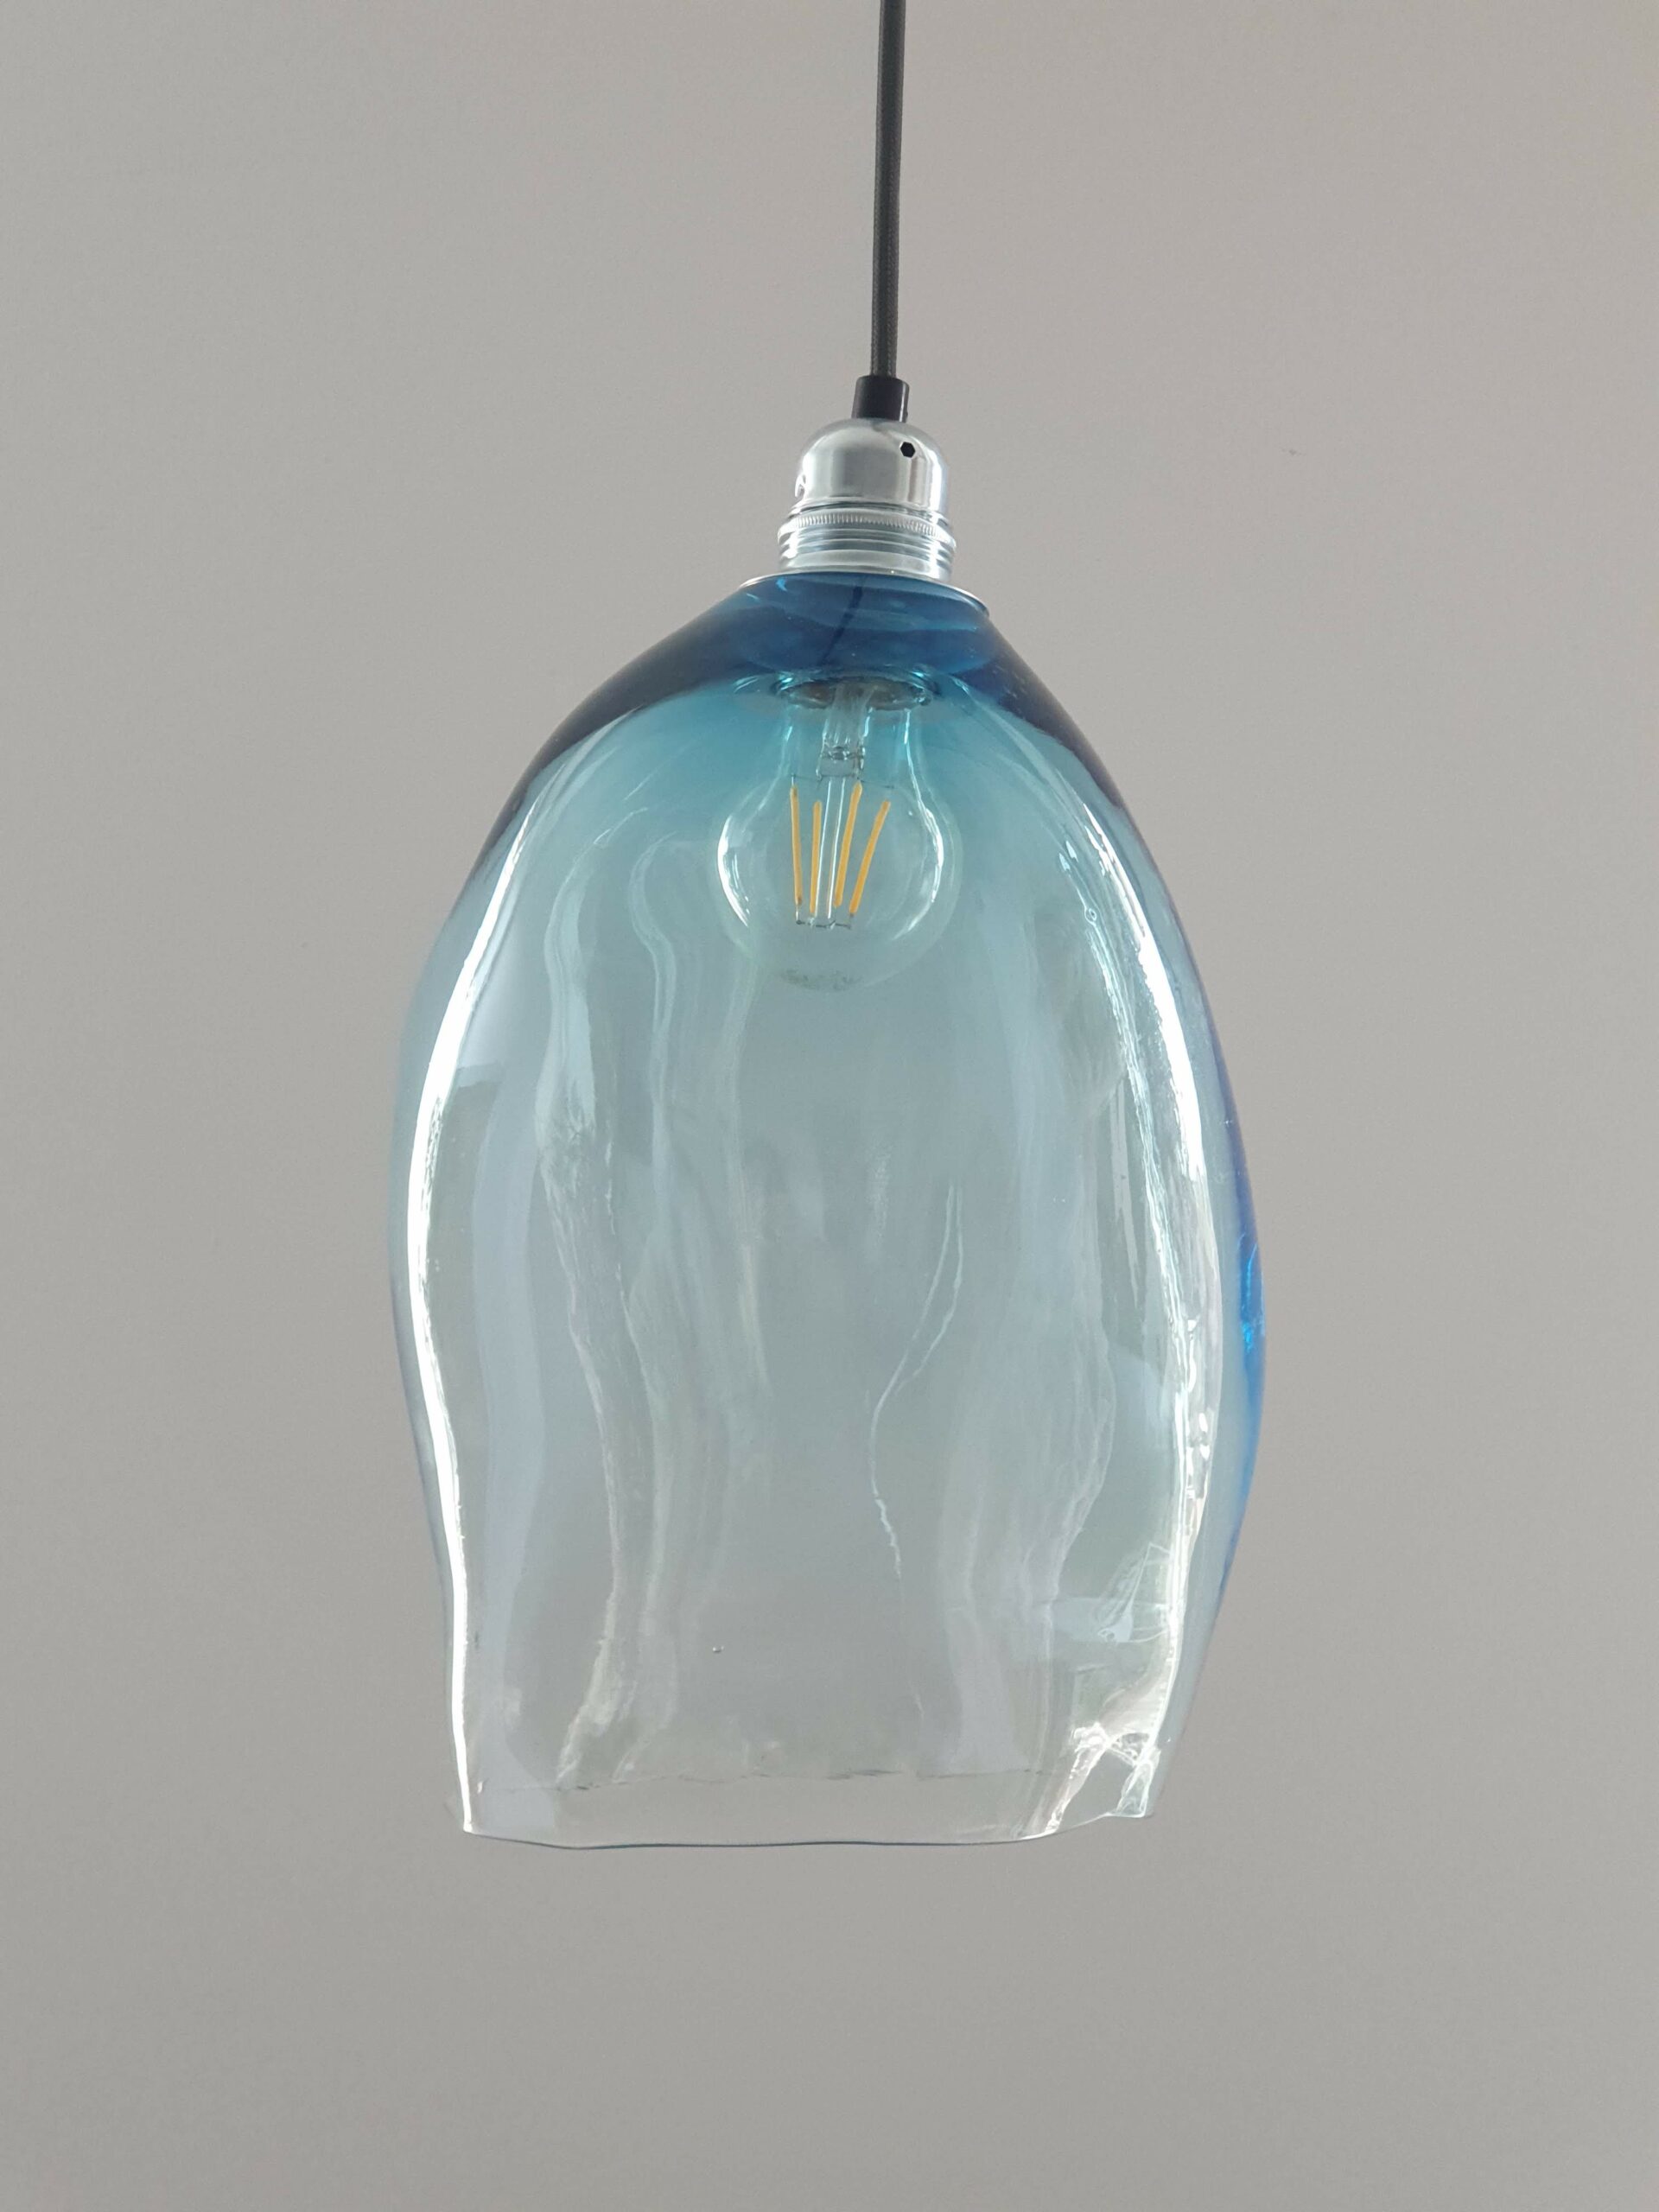 Mens Stereotype Doelwit kreukel lamp blauw | Design shop Jhh productions